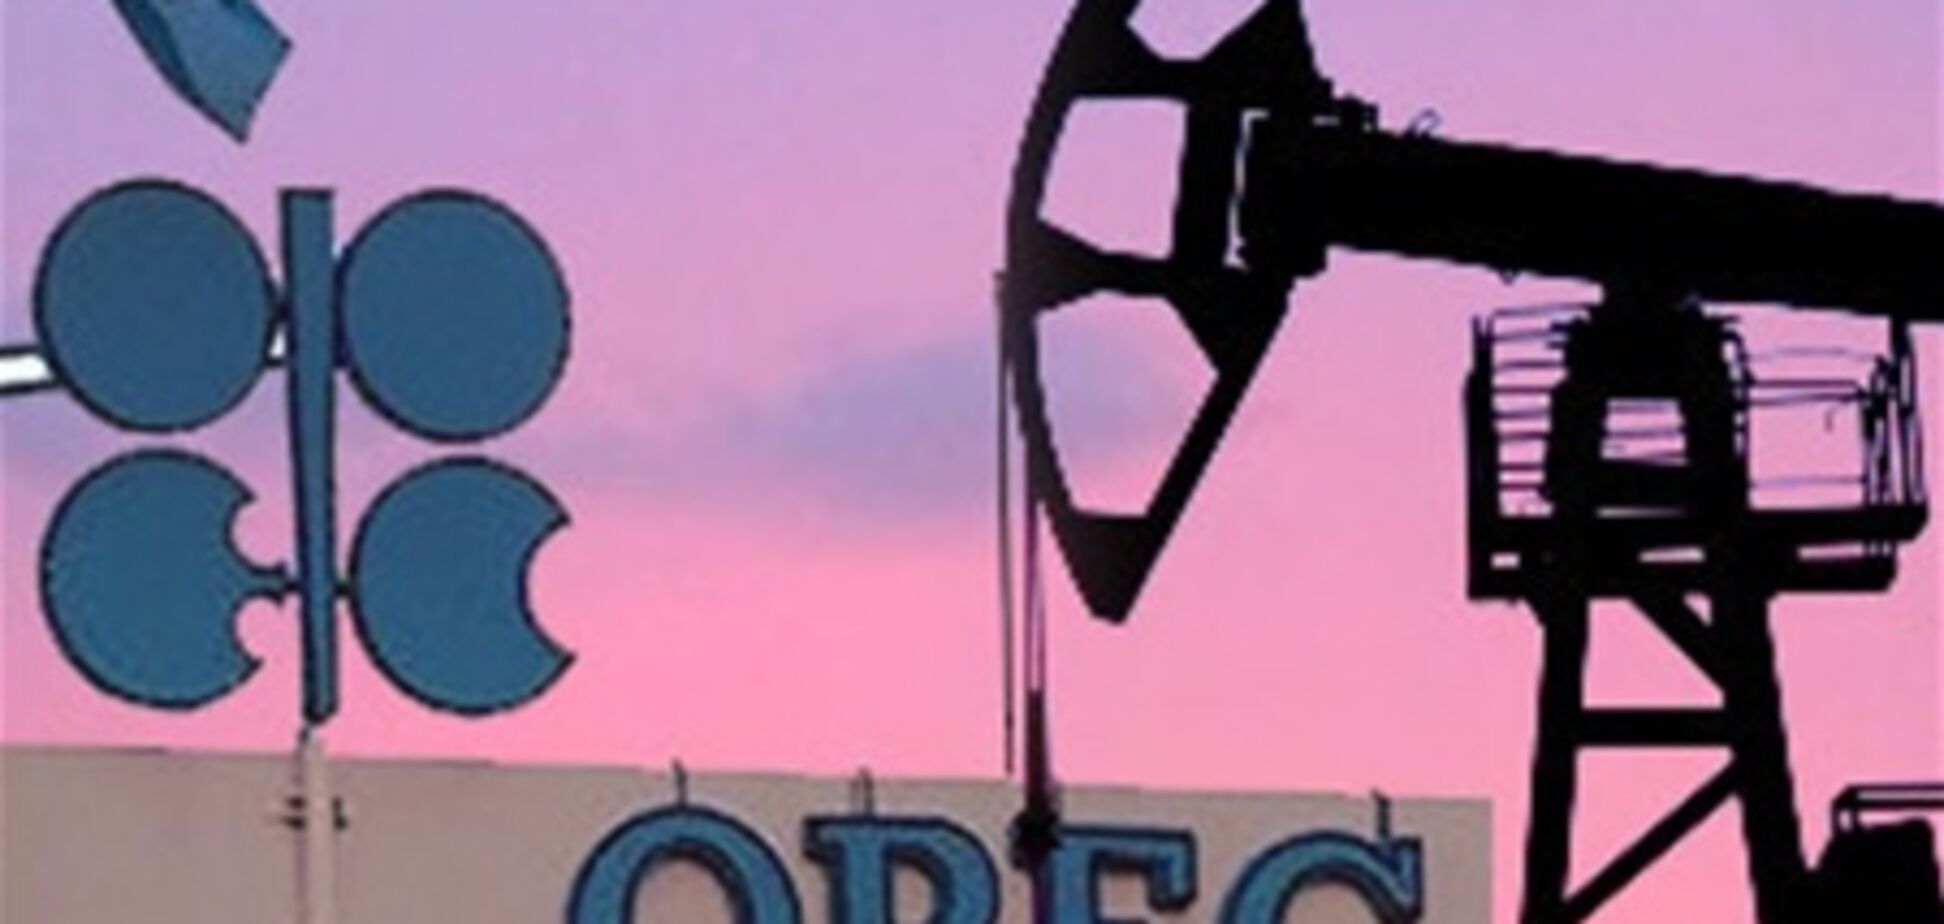 ОПЕК понизит цену на нефть